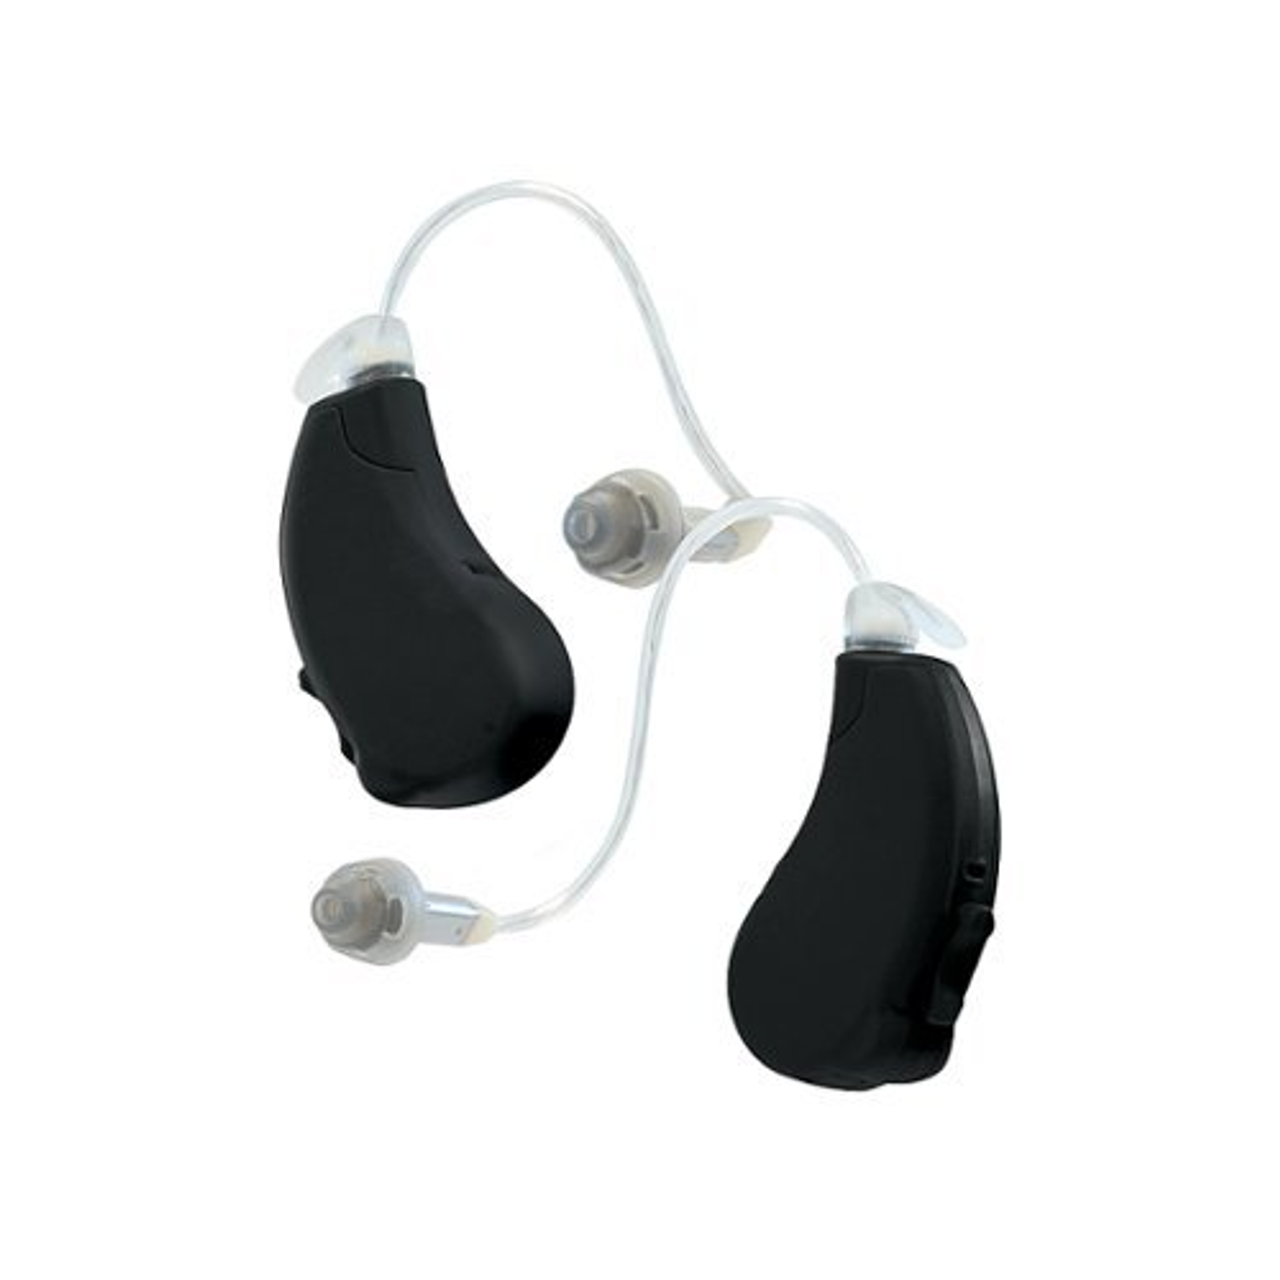 Lucid Hearing - OTC Engage Premium Hearing Aids iPhone - Black